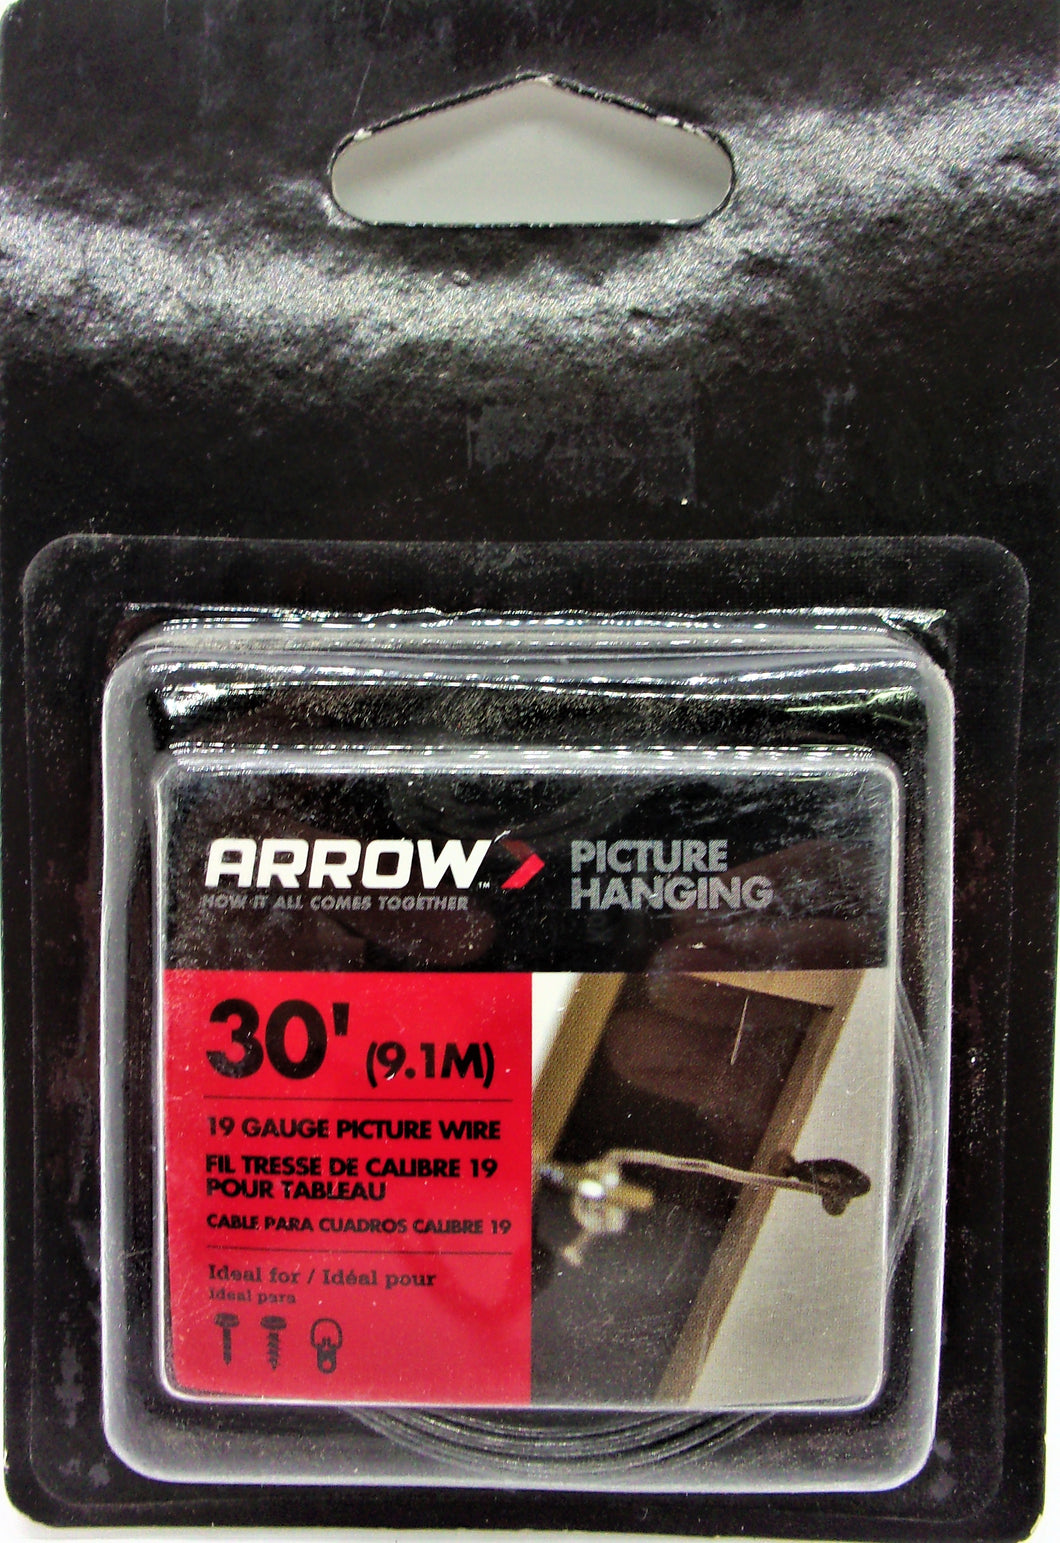 ARROW 166890 30' (9.1M) Cable para cuadros calibre 19